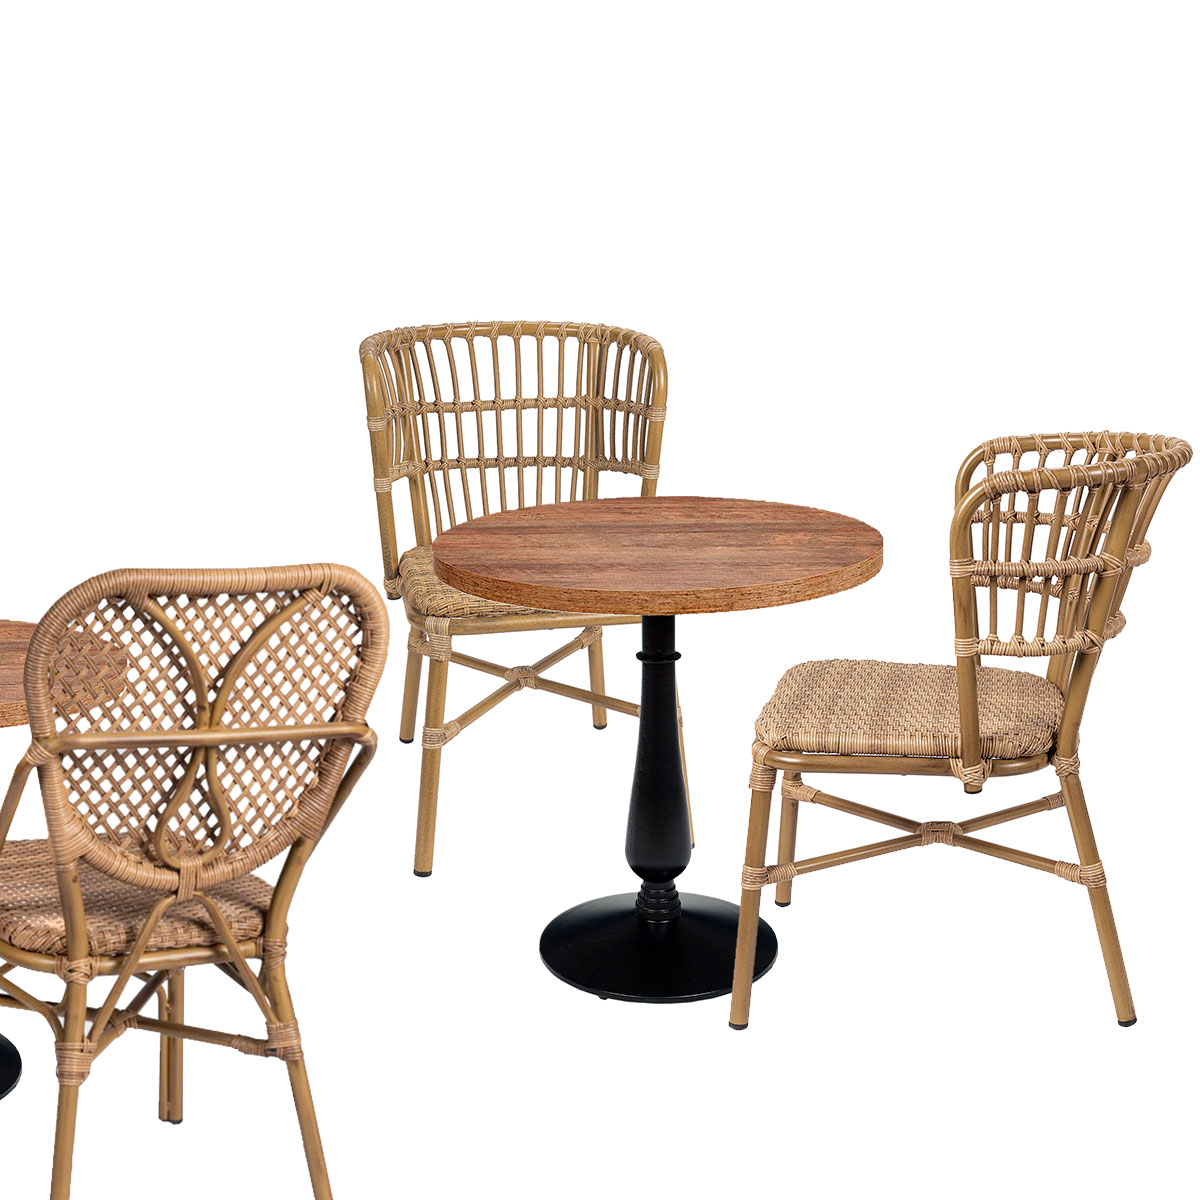 Conjunto mesa opera con sillas samoa y palais